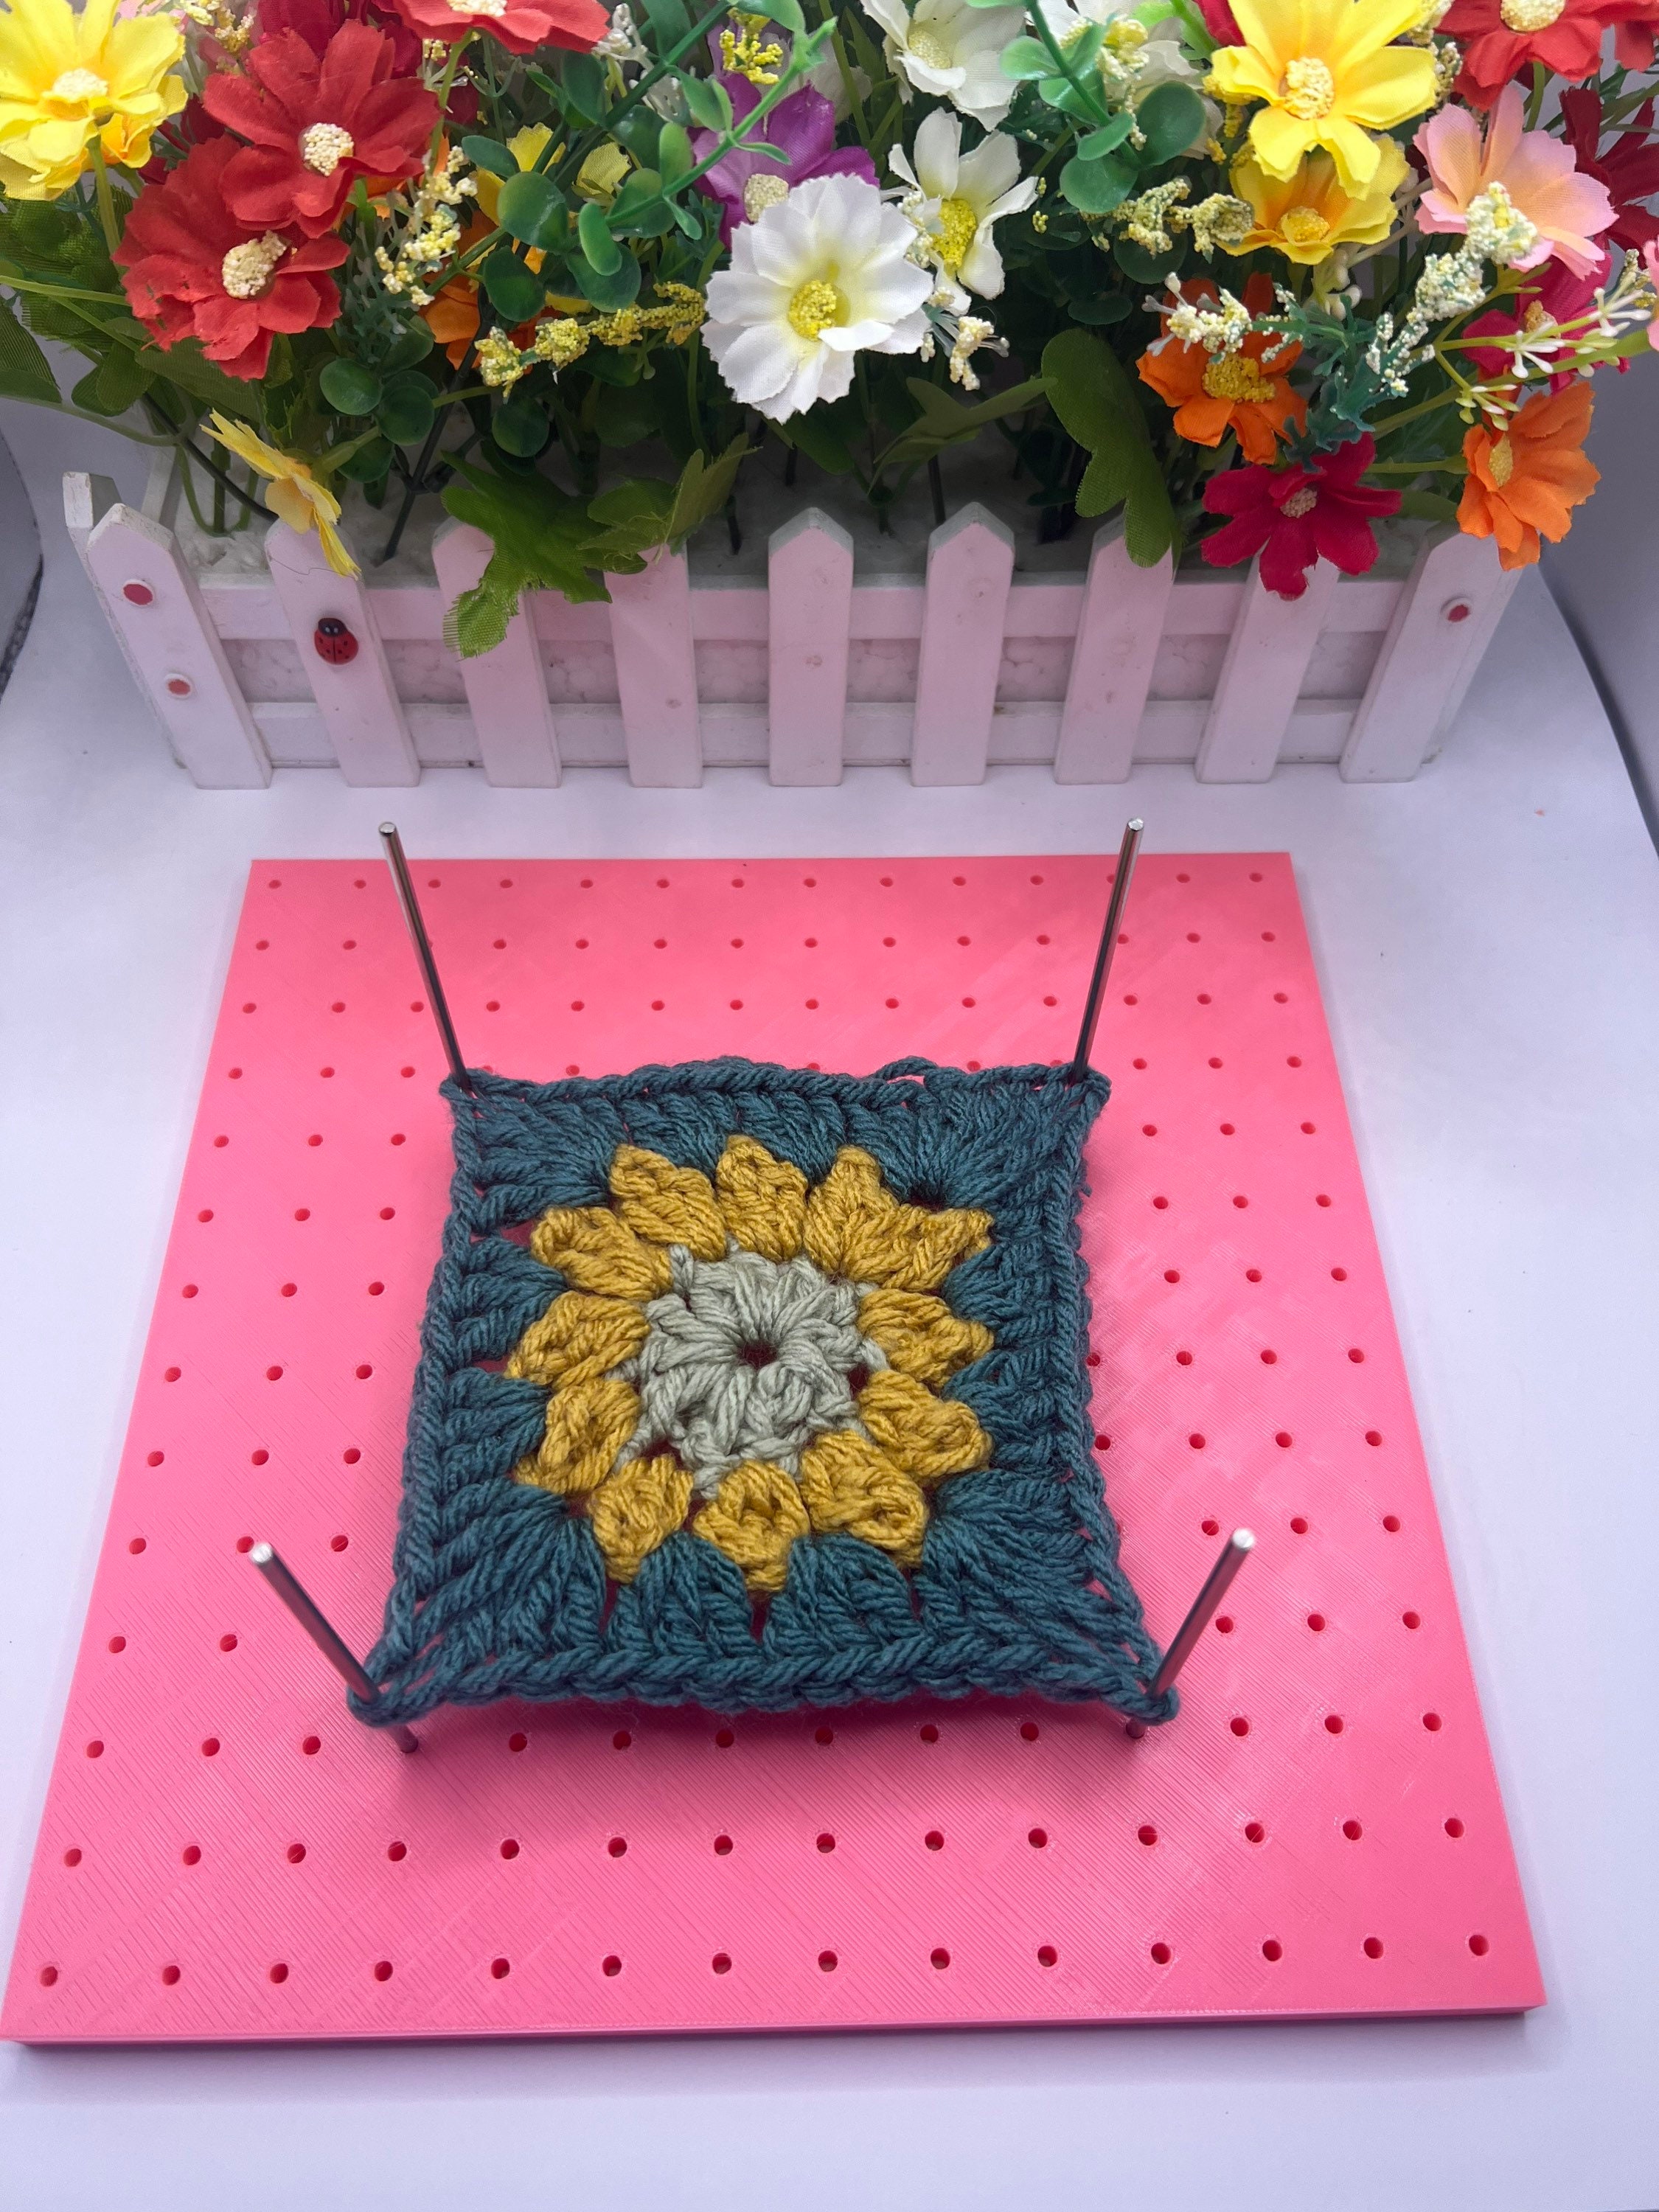 Generic Crochet Blocking Board with Pins ,Blocking Mats